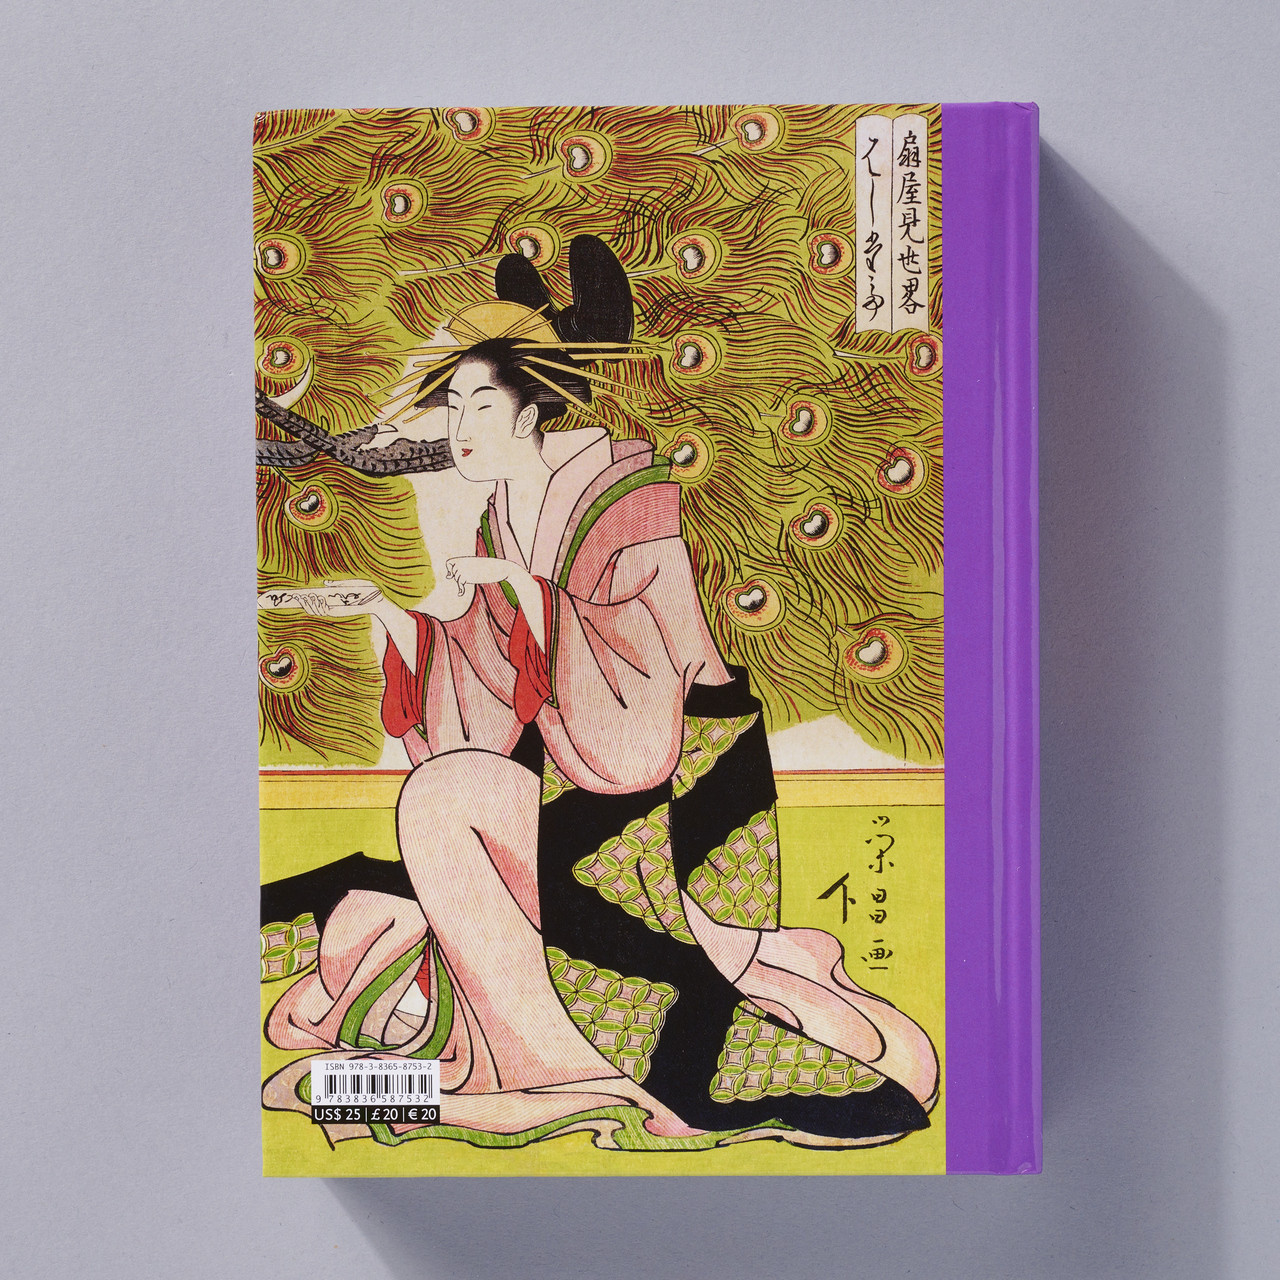 TASCHEN Books: Japanese Woodblock Prints